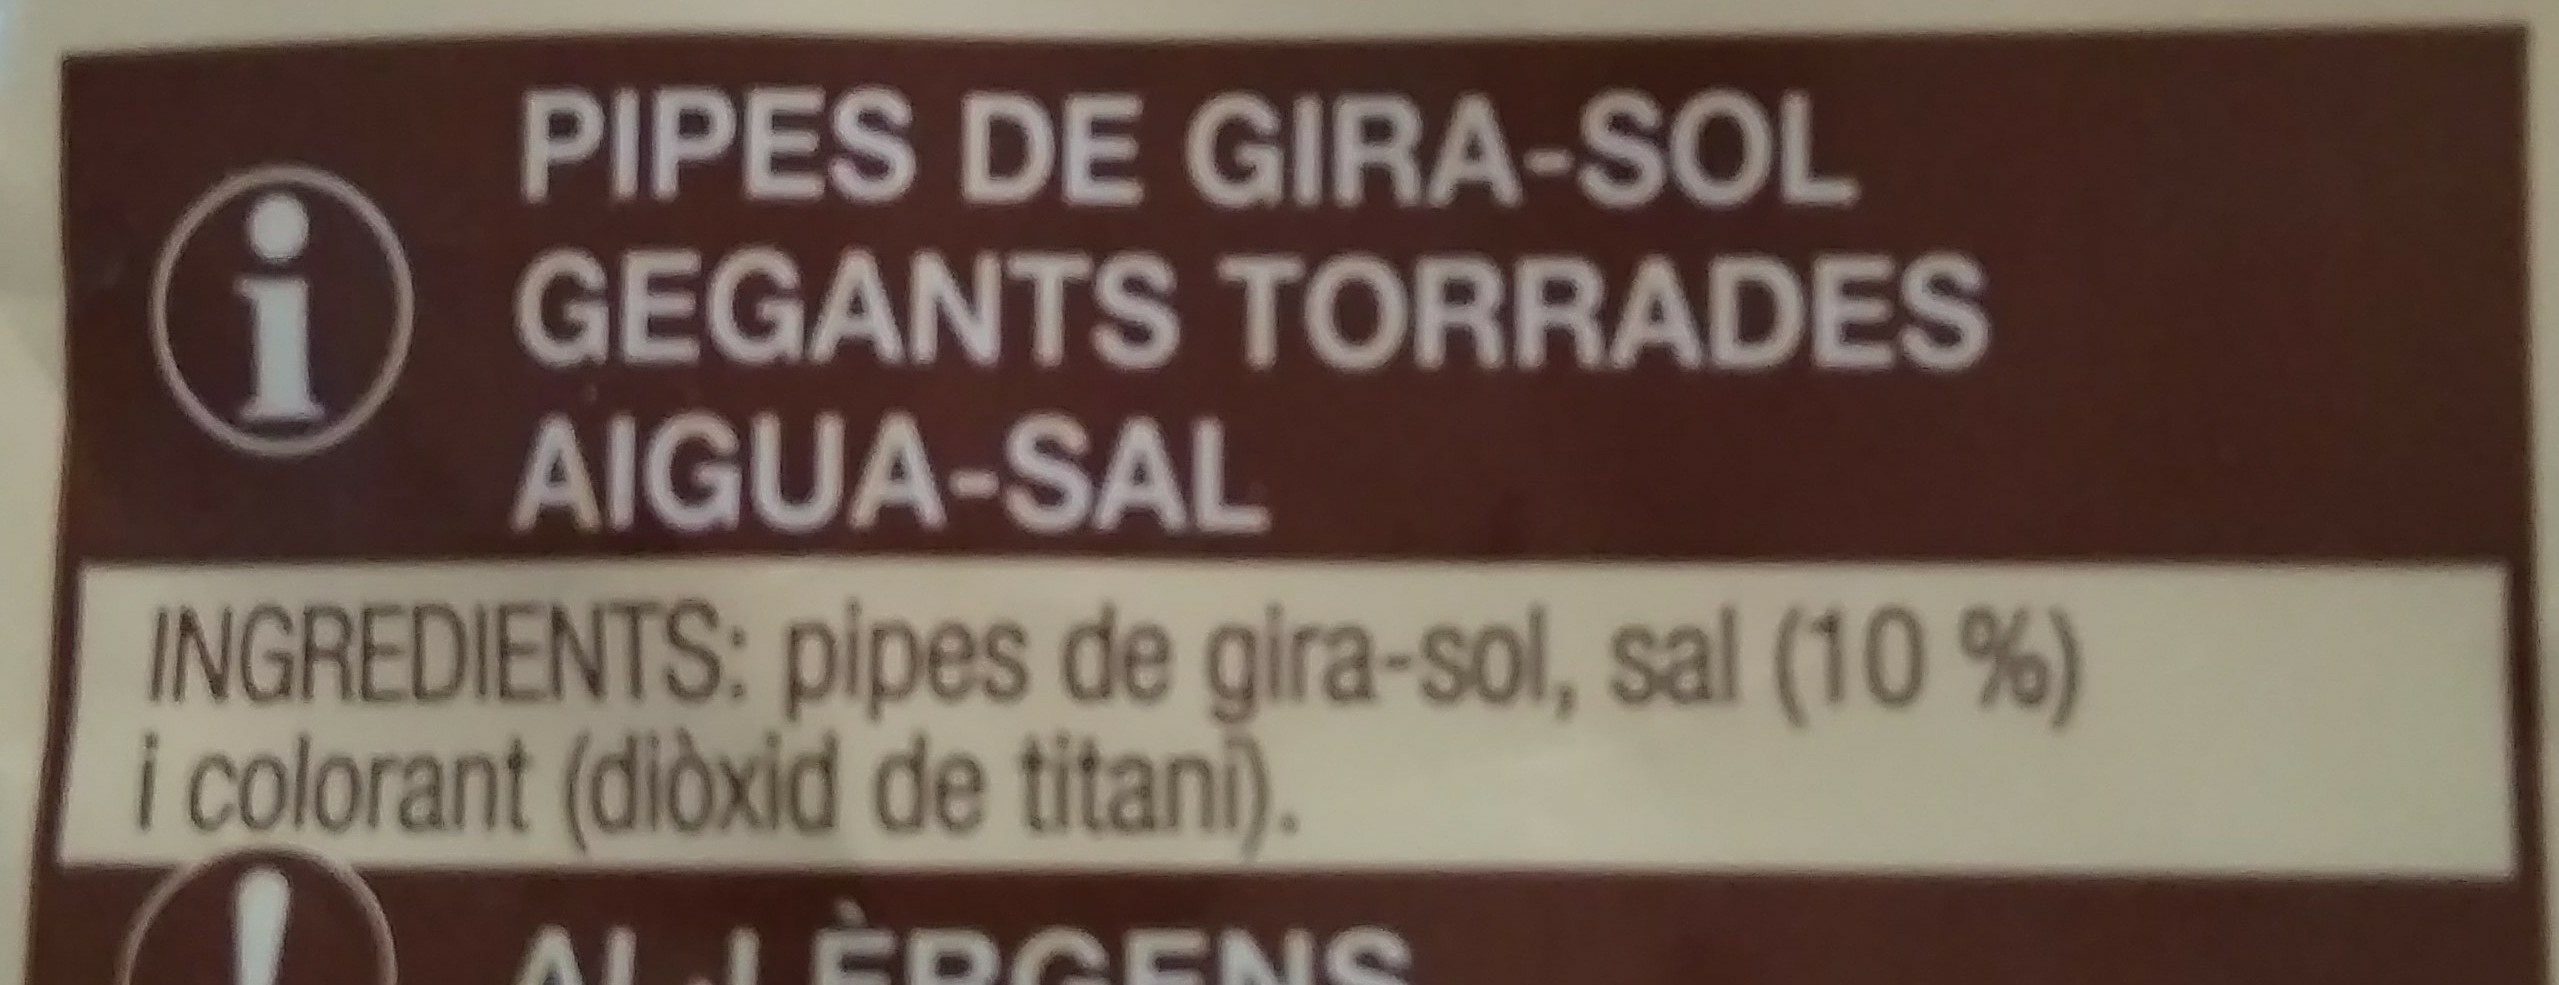 Pipas - Ingredients - fr